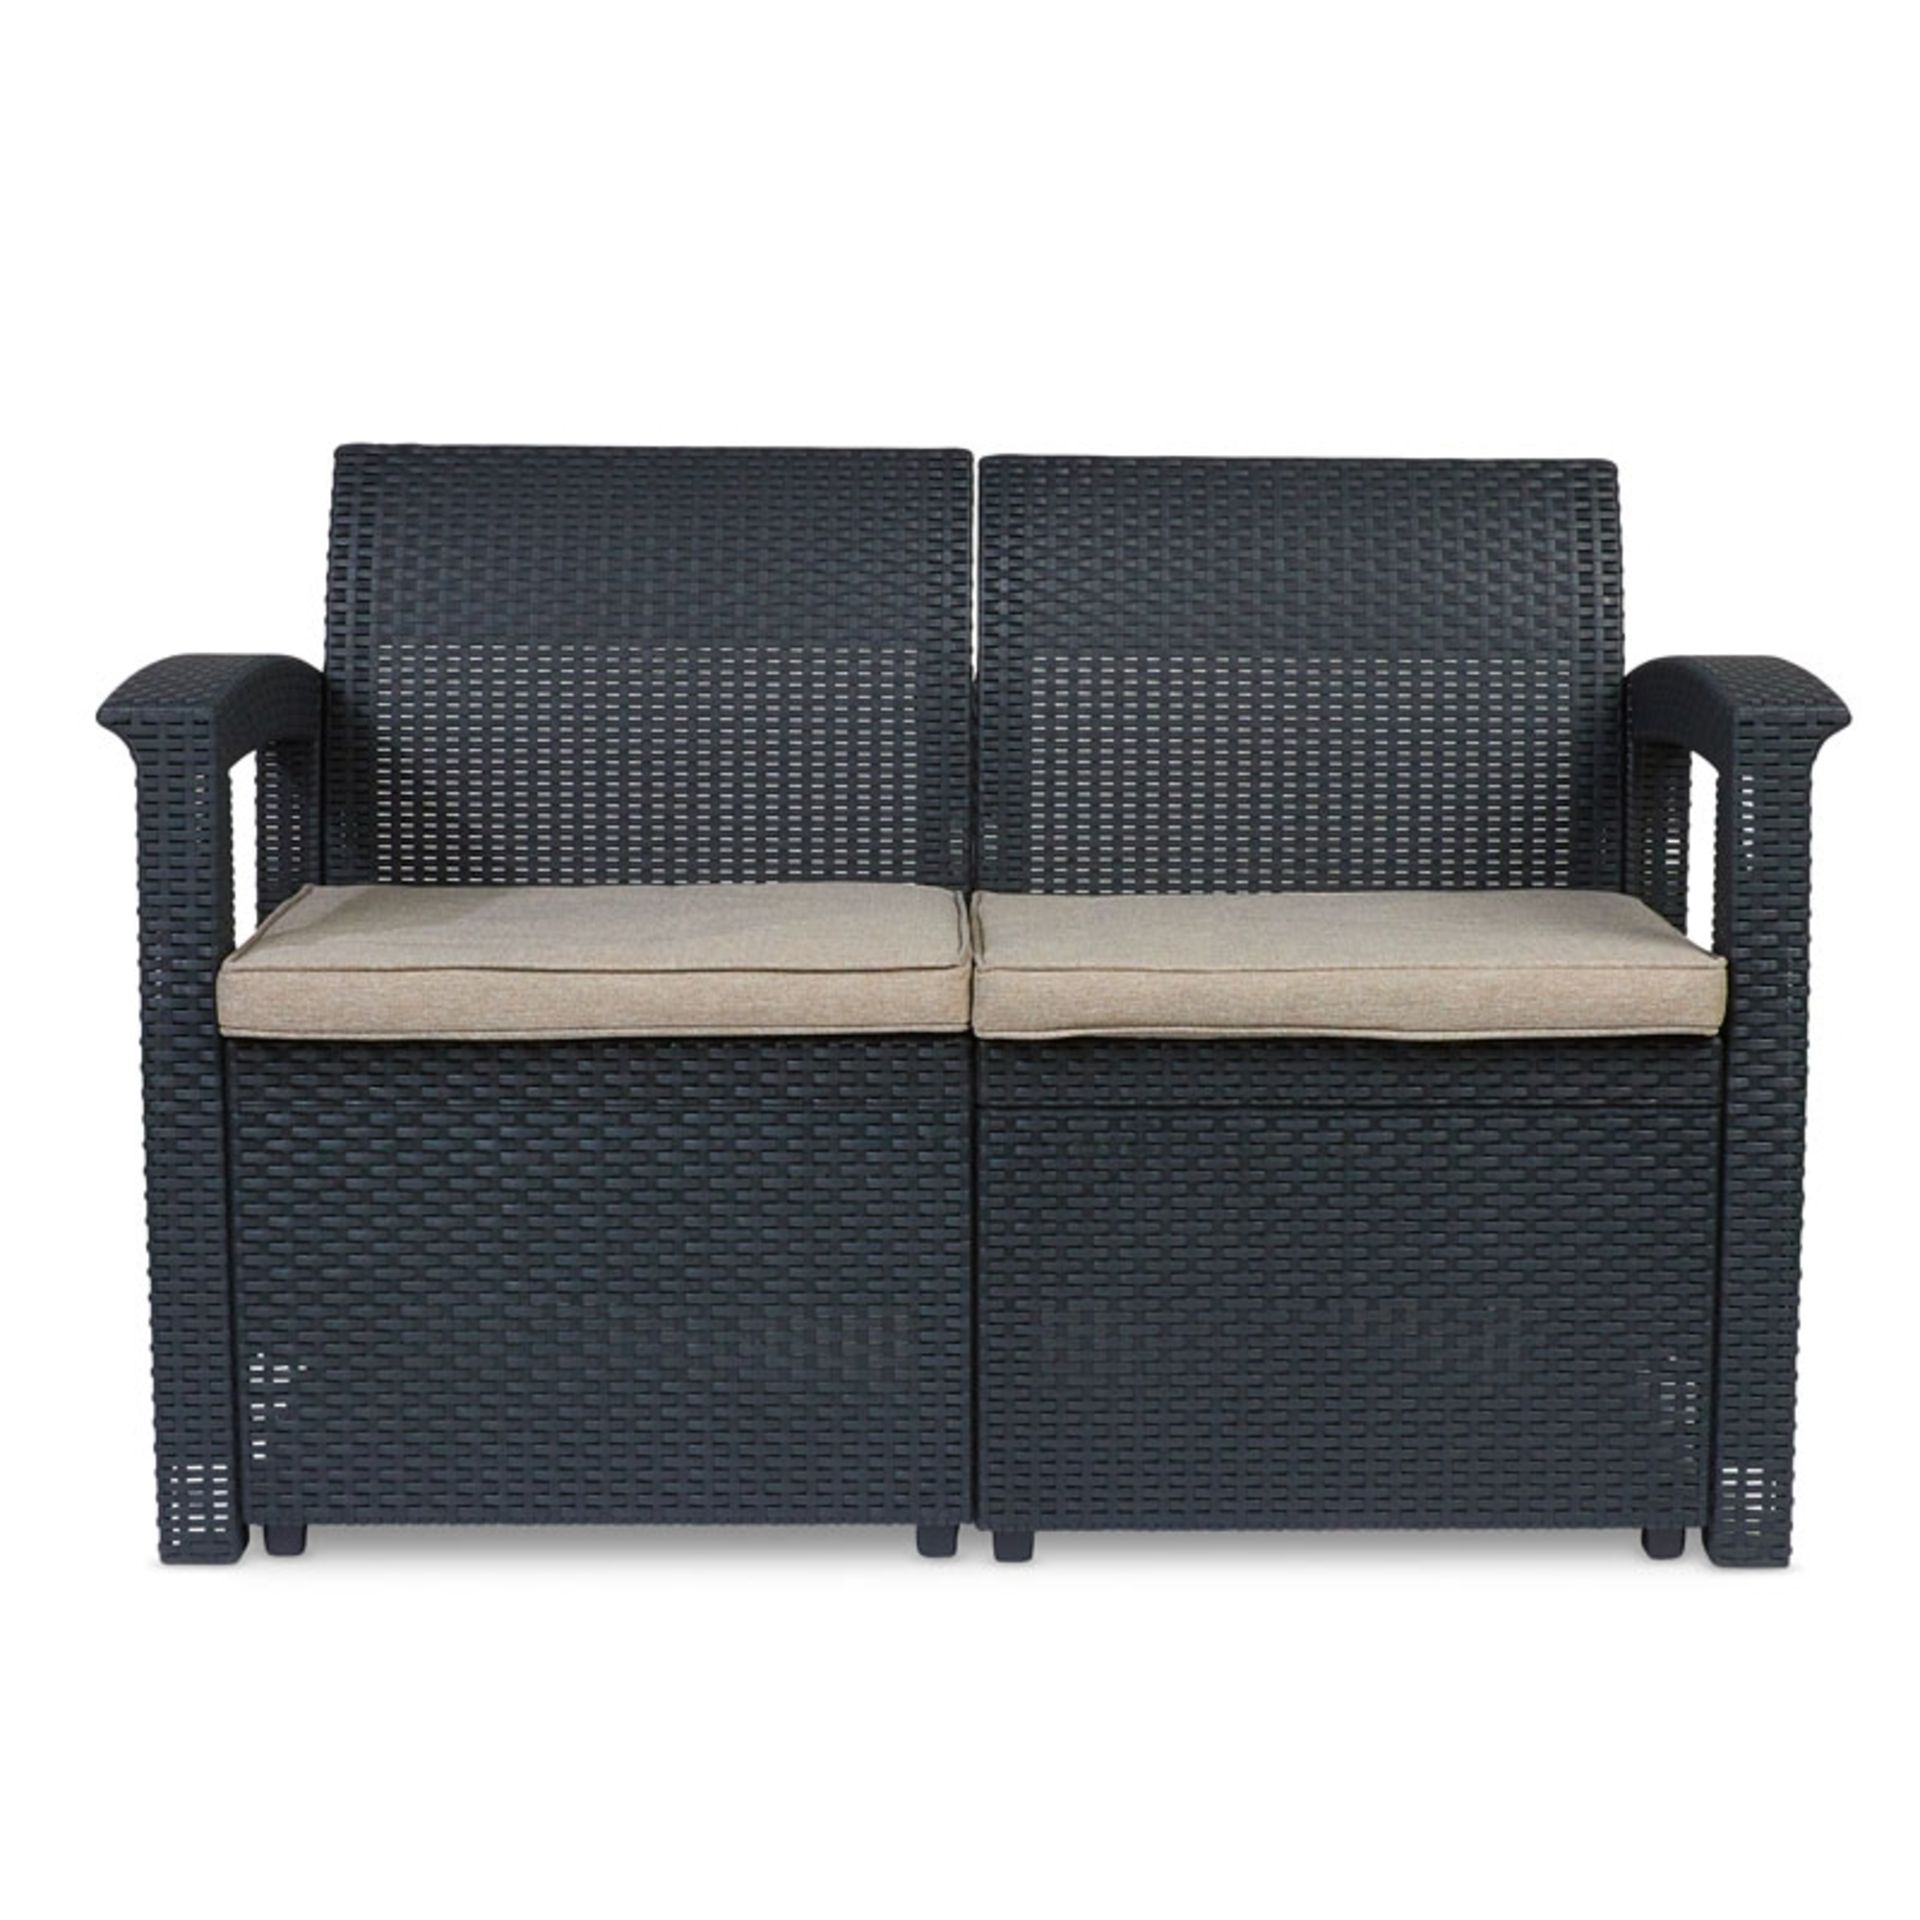 ABLO Ursa 4 Seater Lounge Set - Image 2 of 4